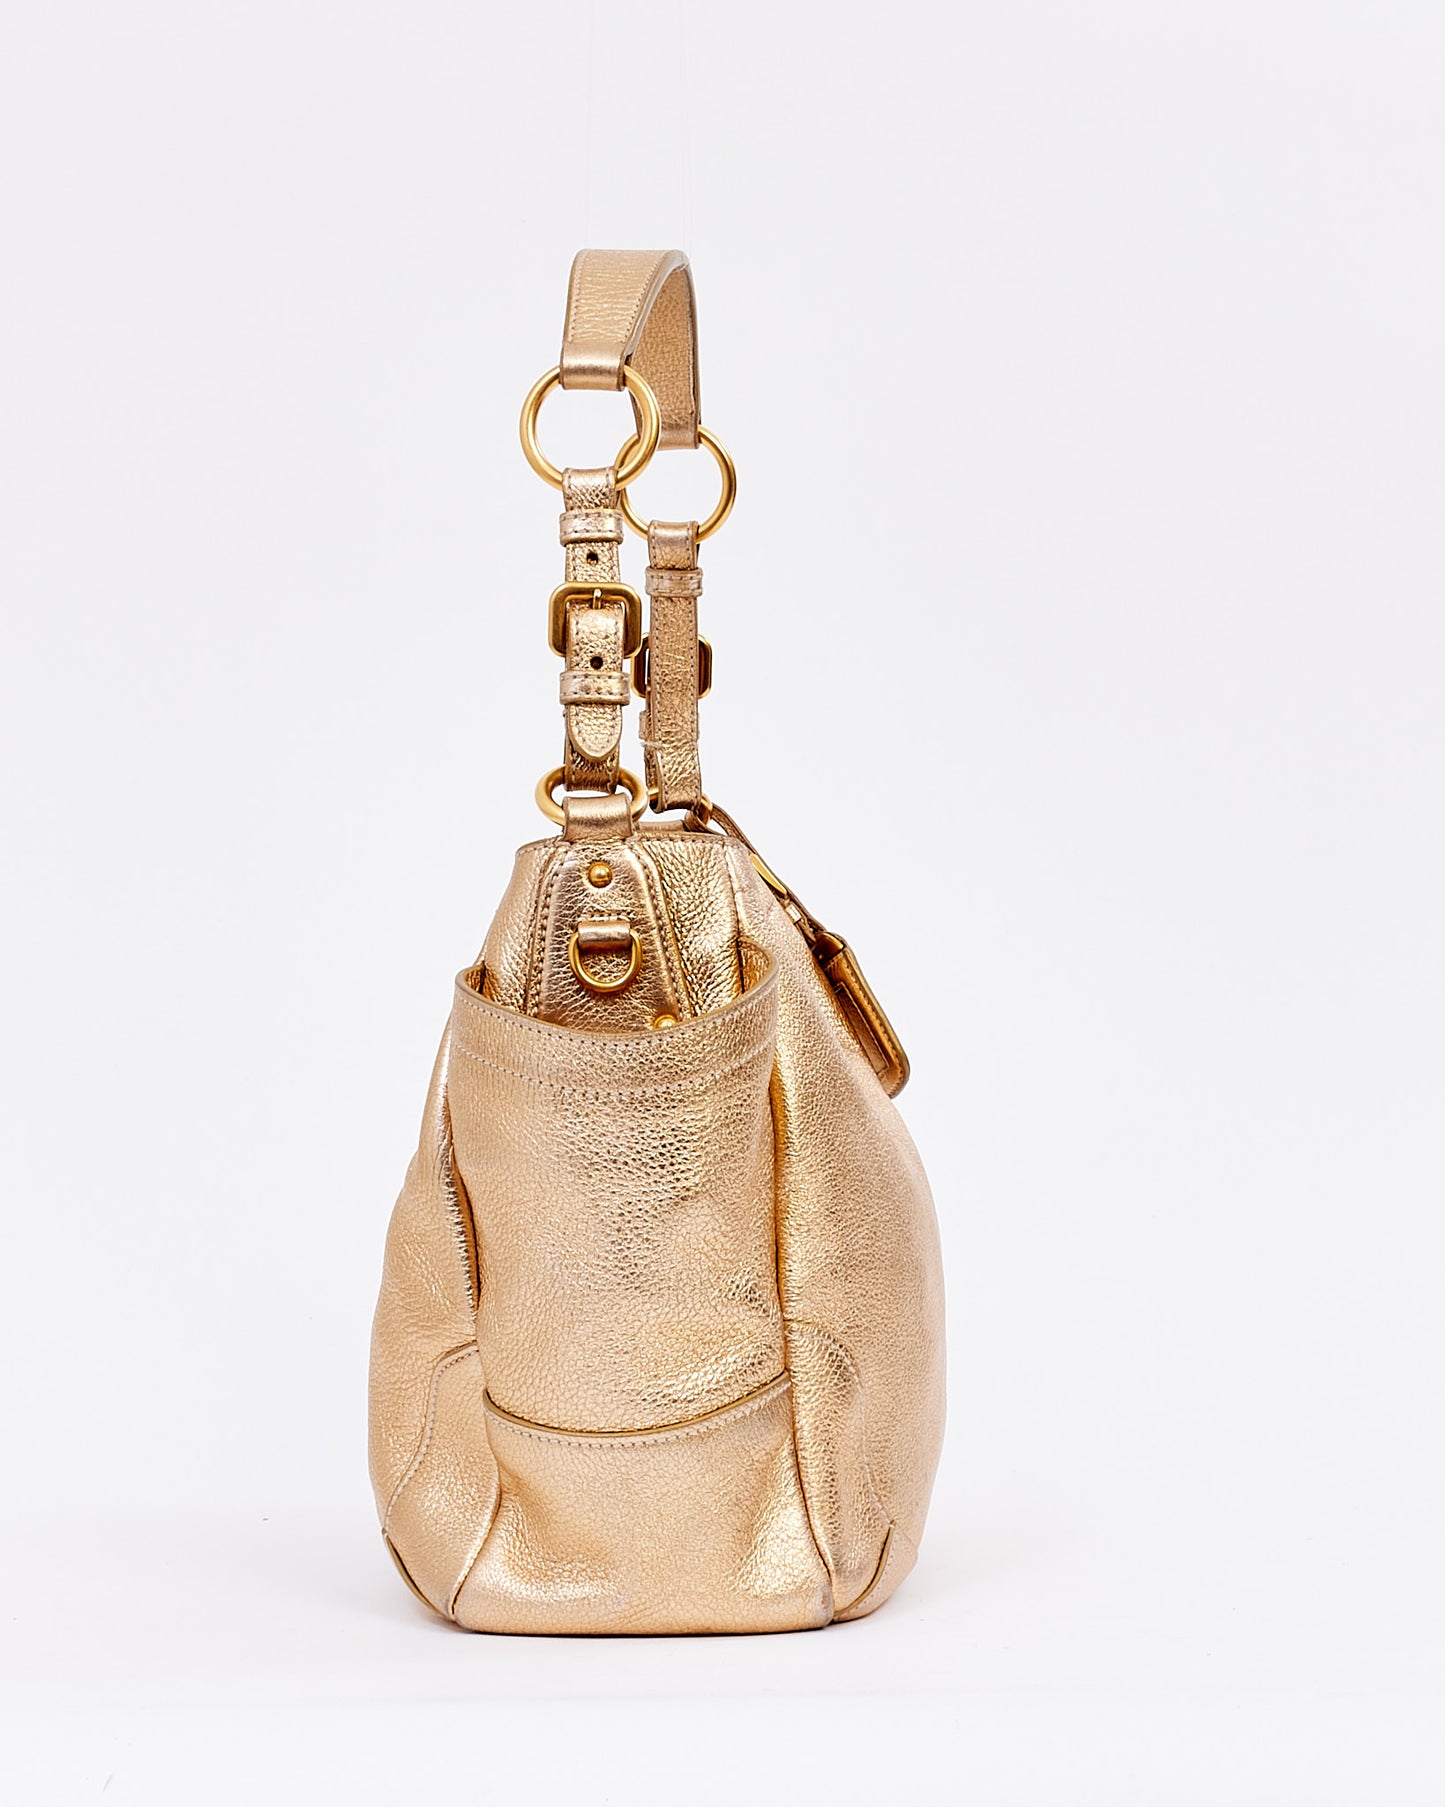 Prada Gold Metallic Daino Leather Hobo Shoulder Bag